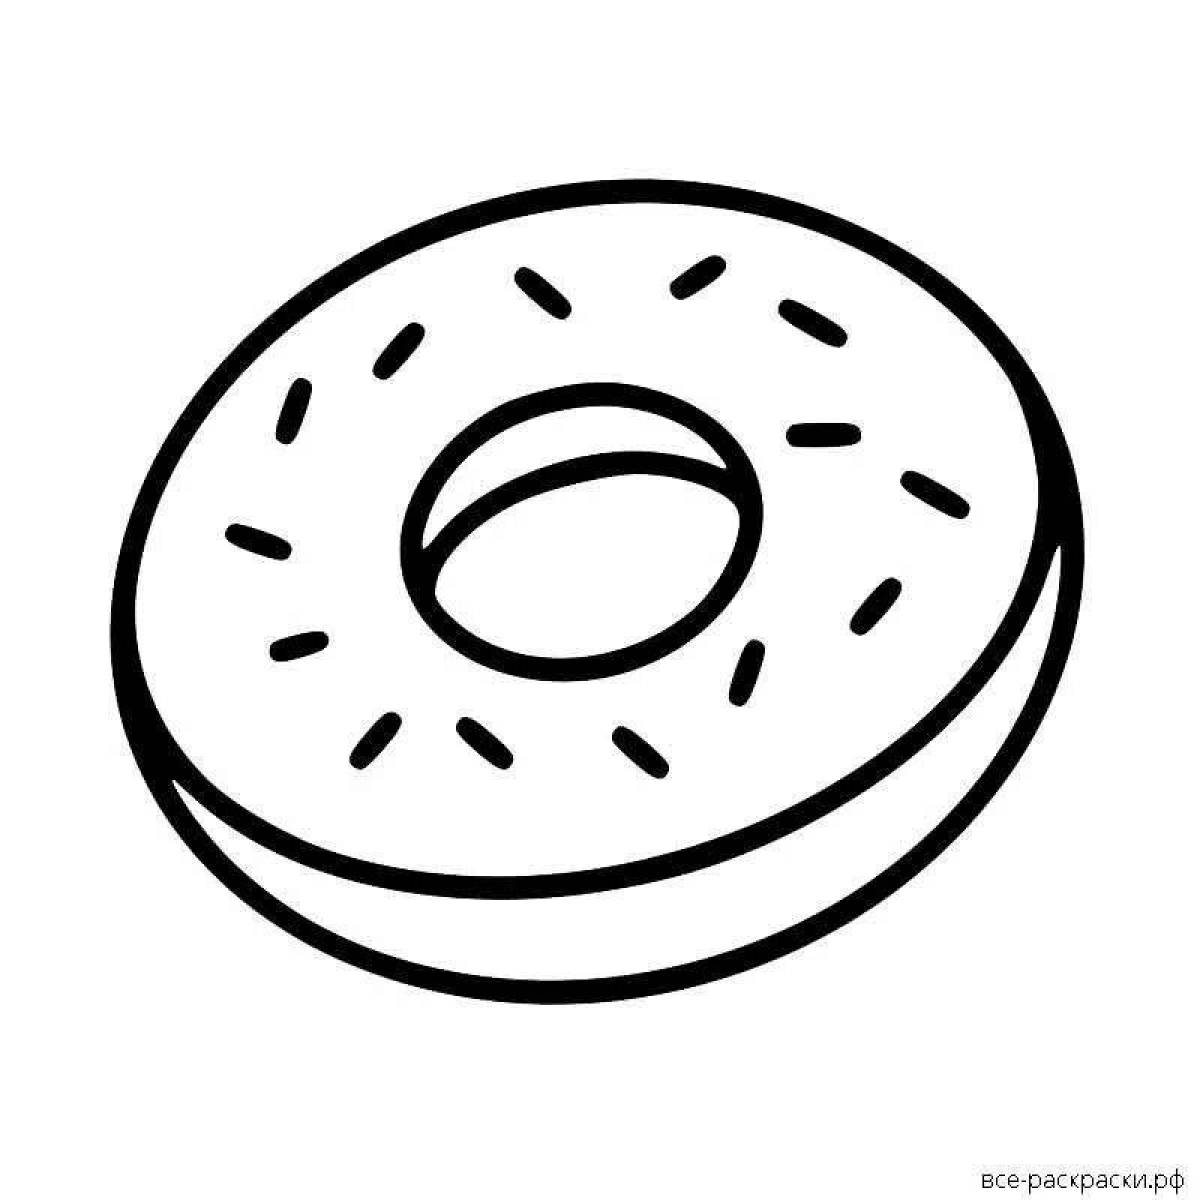 Children's donut #3